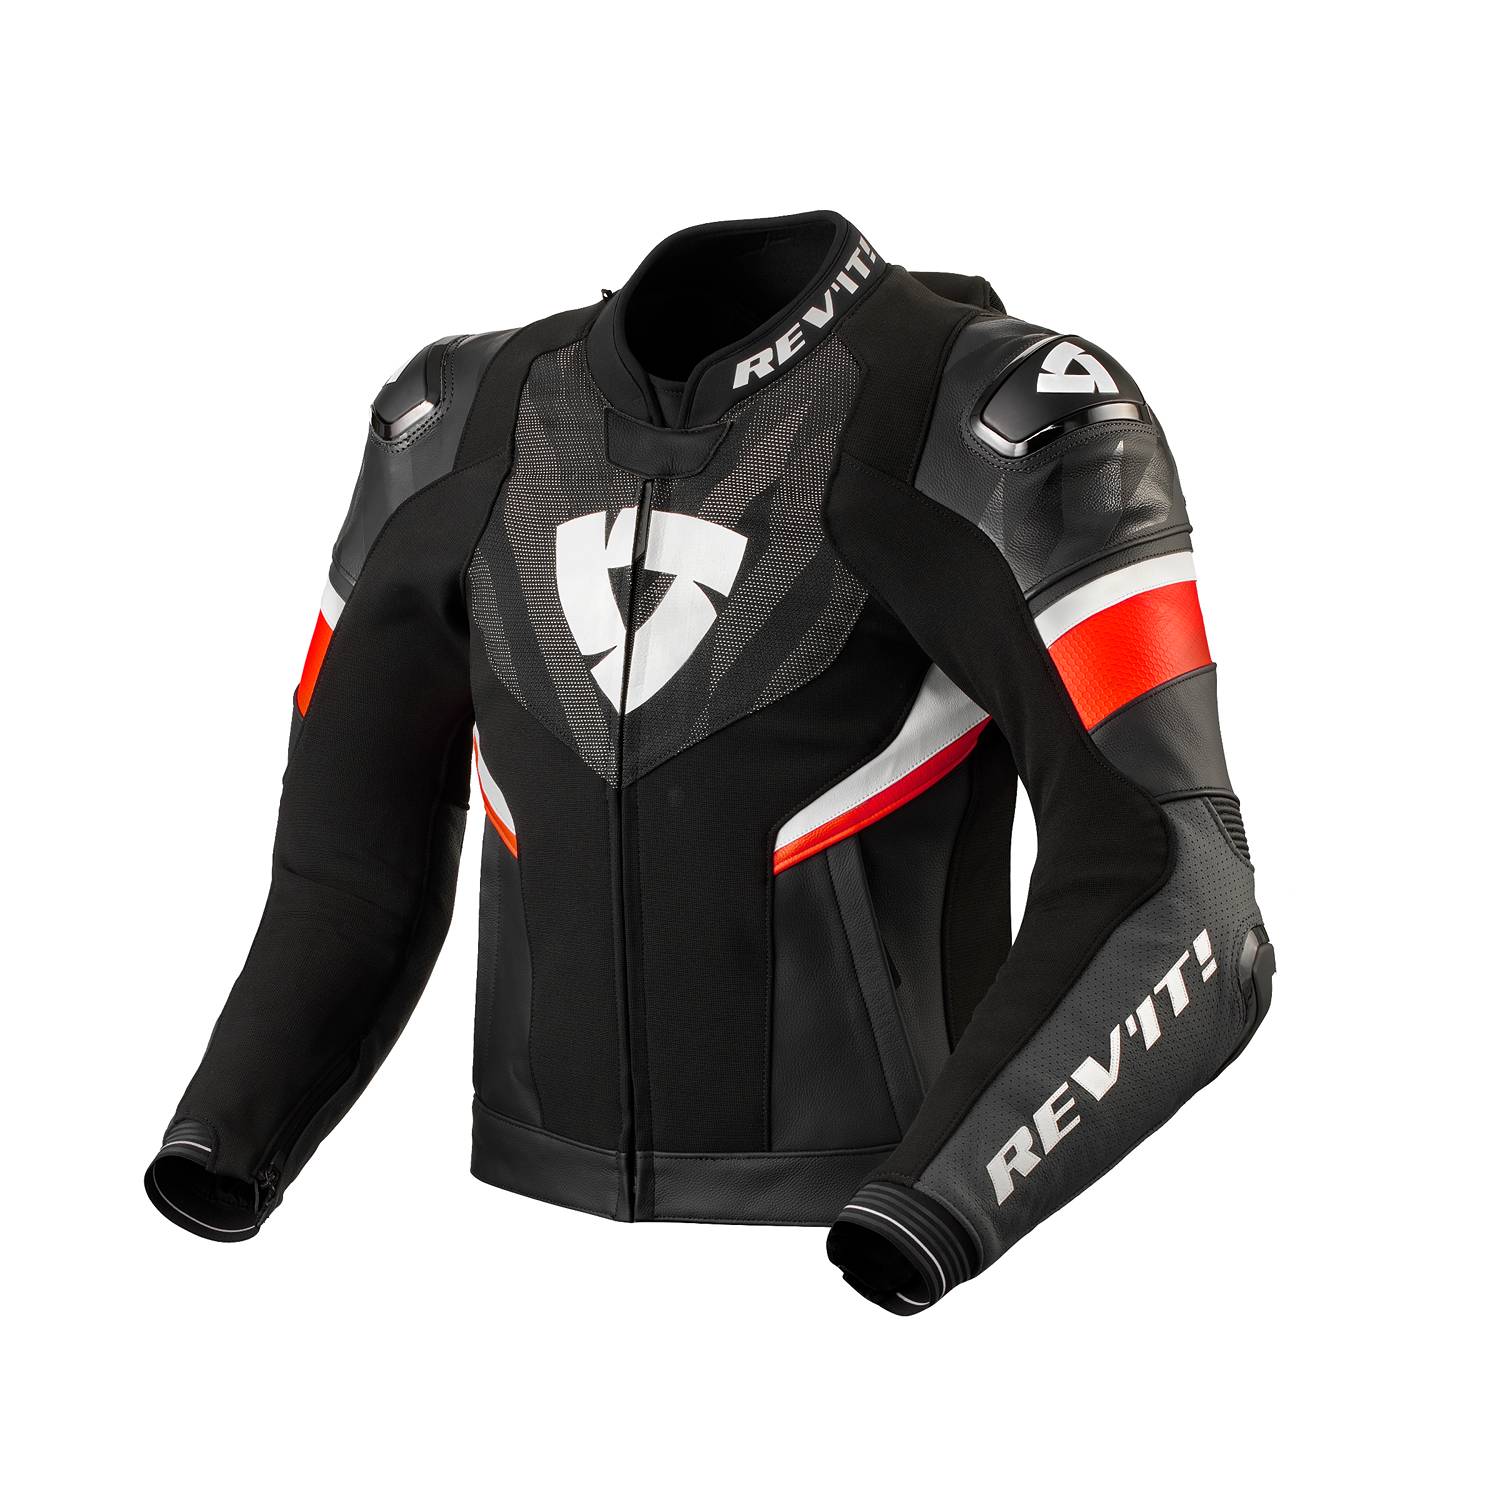 Image of REV'IT! Hyperspeed 2 Pro Jacket Black Neon Red Size 50 EN